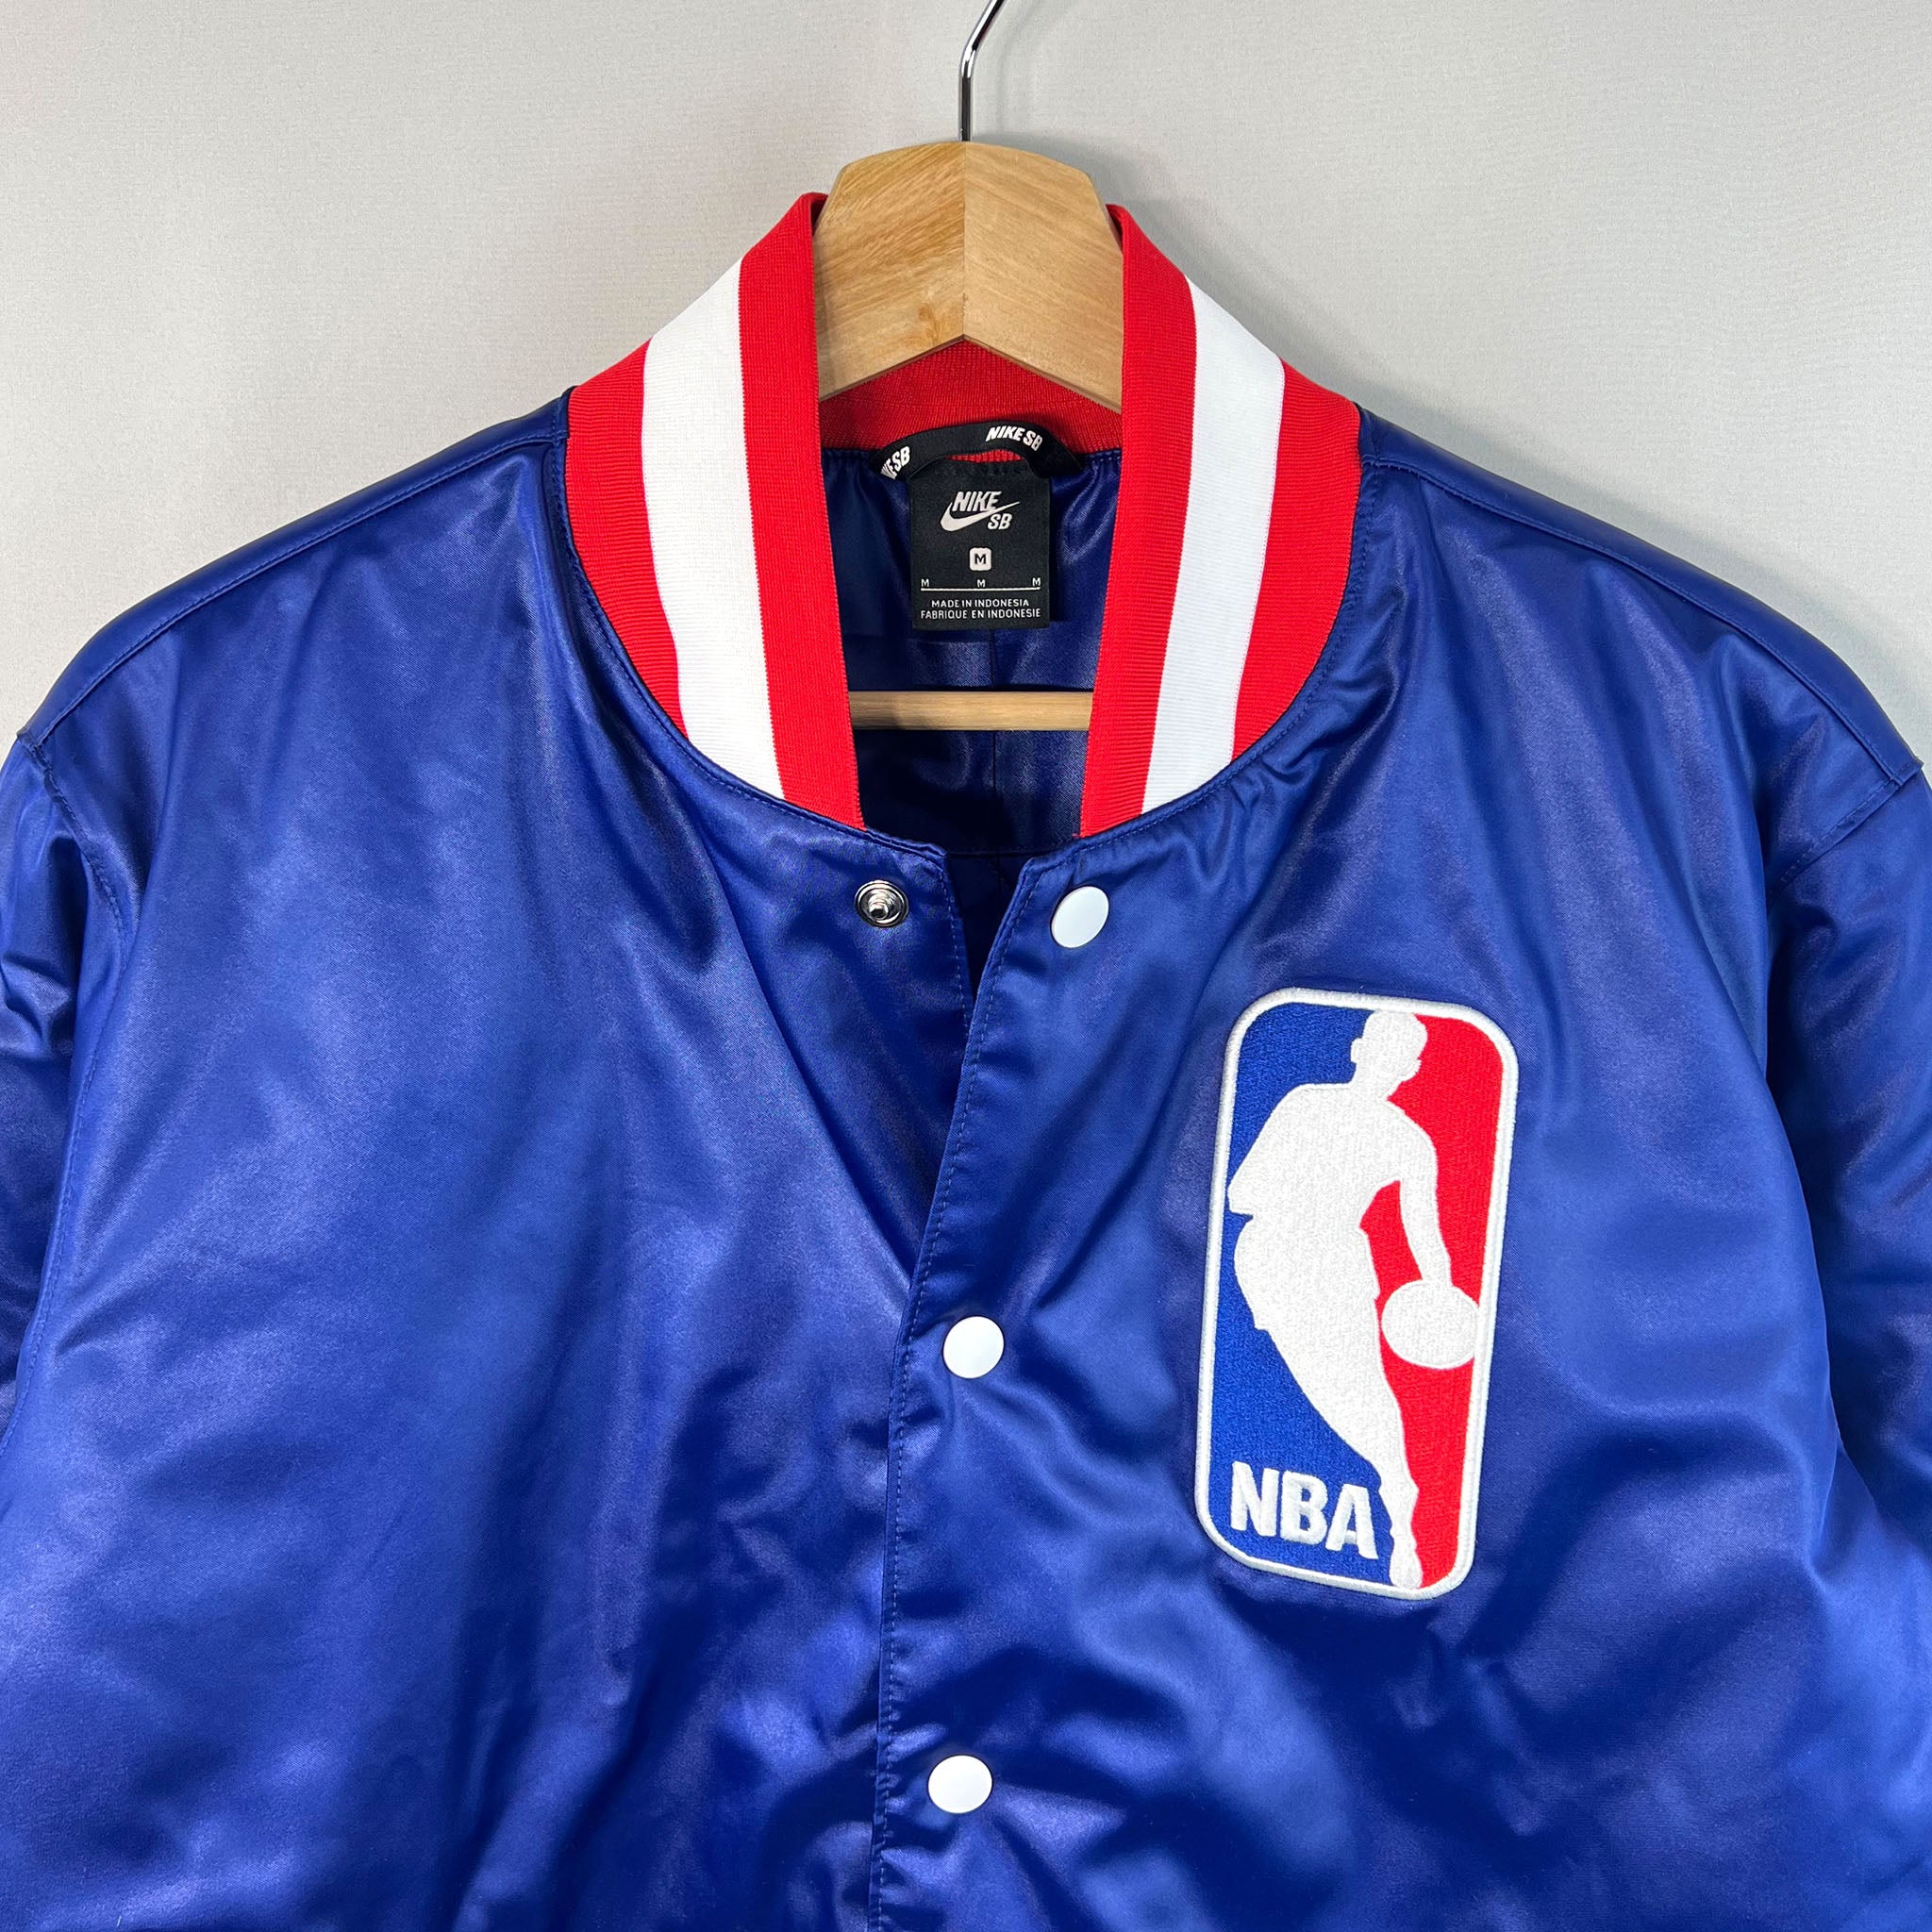 Nike SB x NBA Bomber Jacket